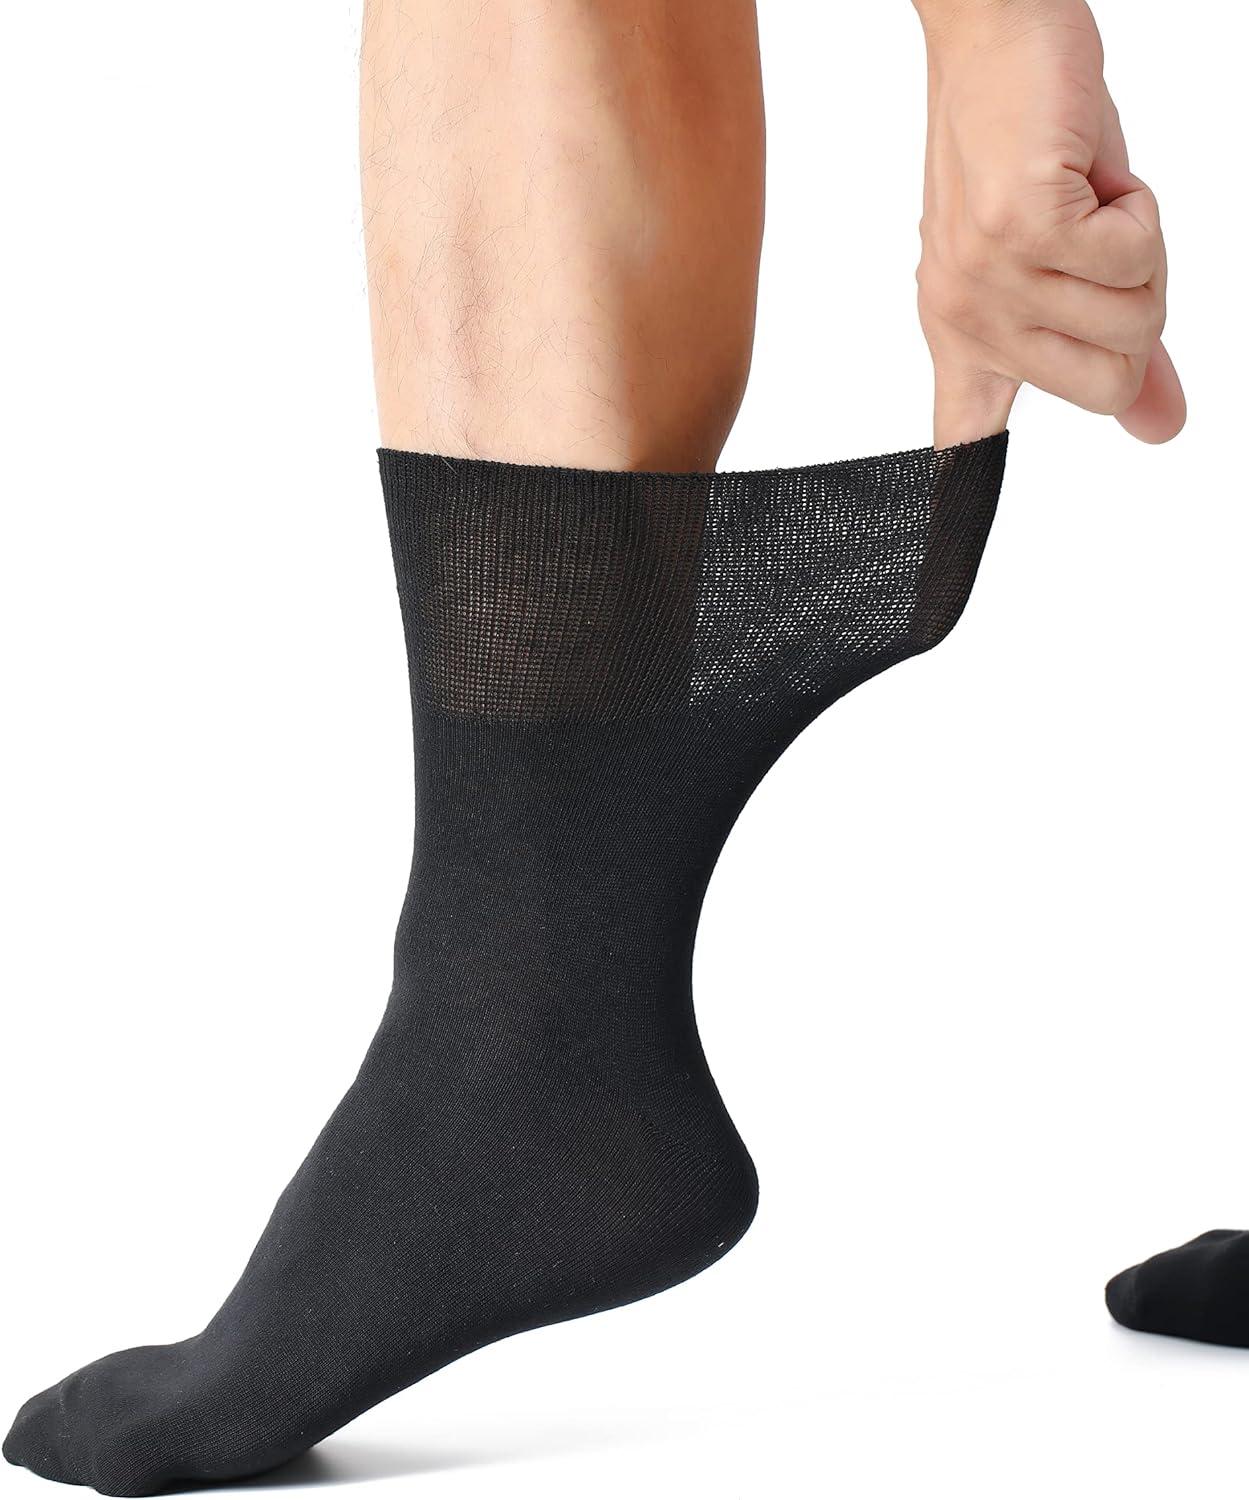 Polawind mens diabetic socks size 10-13 wide loose top men's edema  neuropathy ankle socks for men loose extra wide non binding diabetes sock 1  & 3 & 6 Pair Packs (6 Pair BLACK) One Size Black